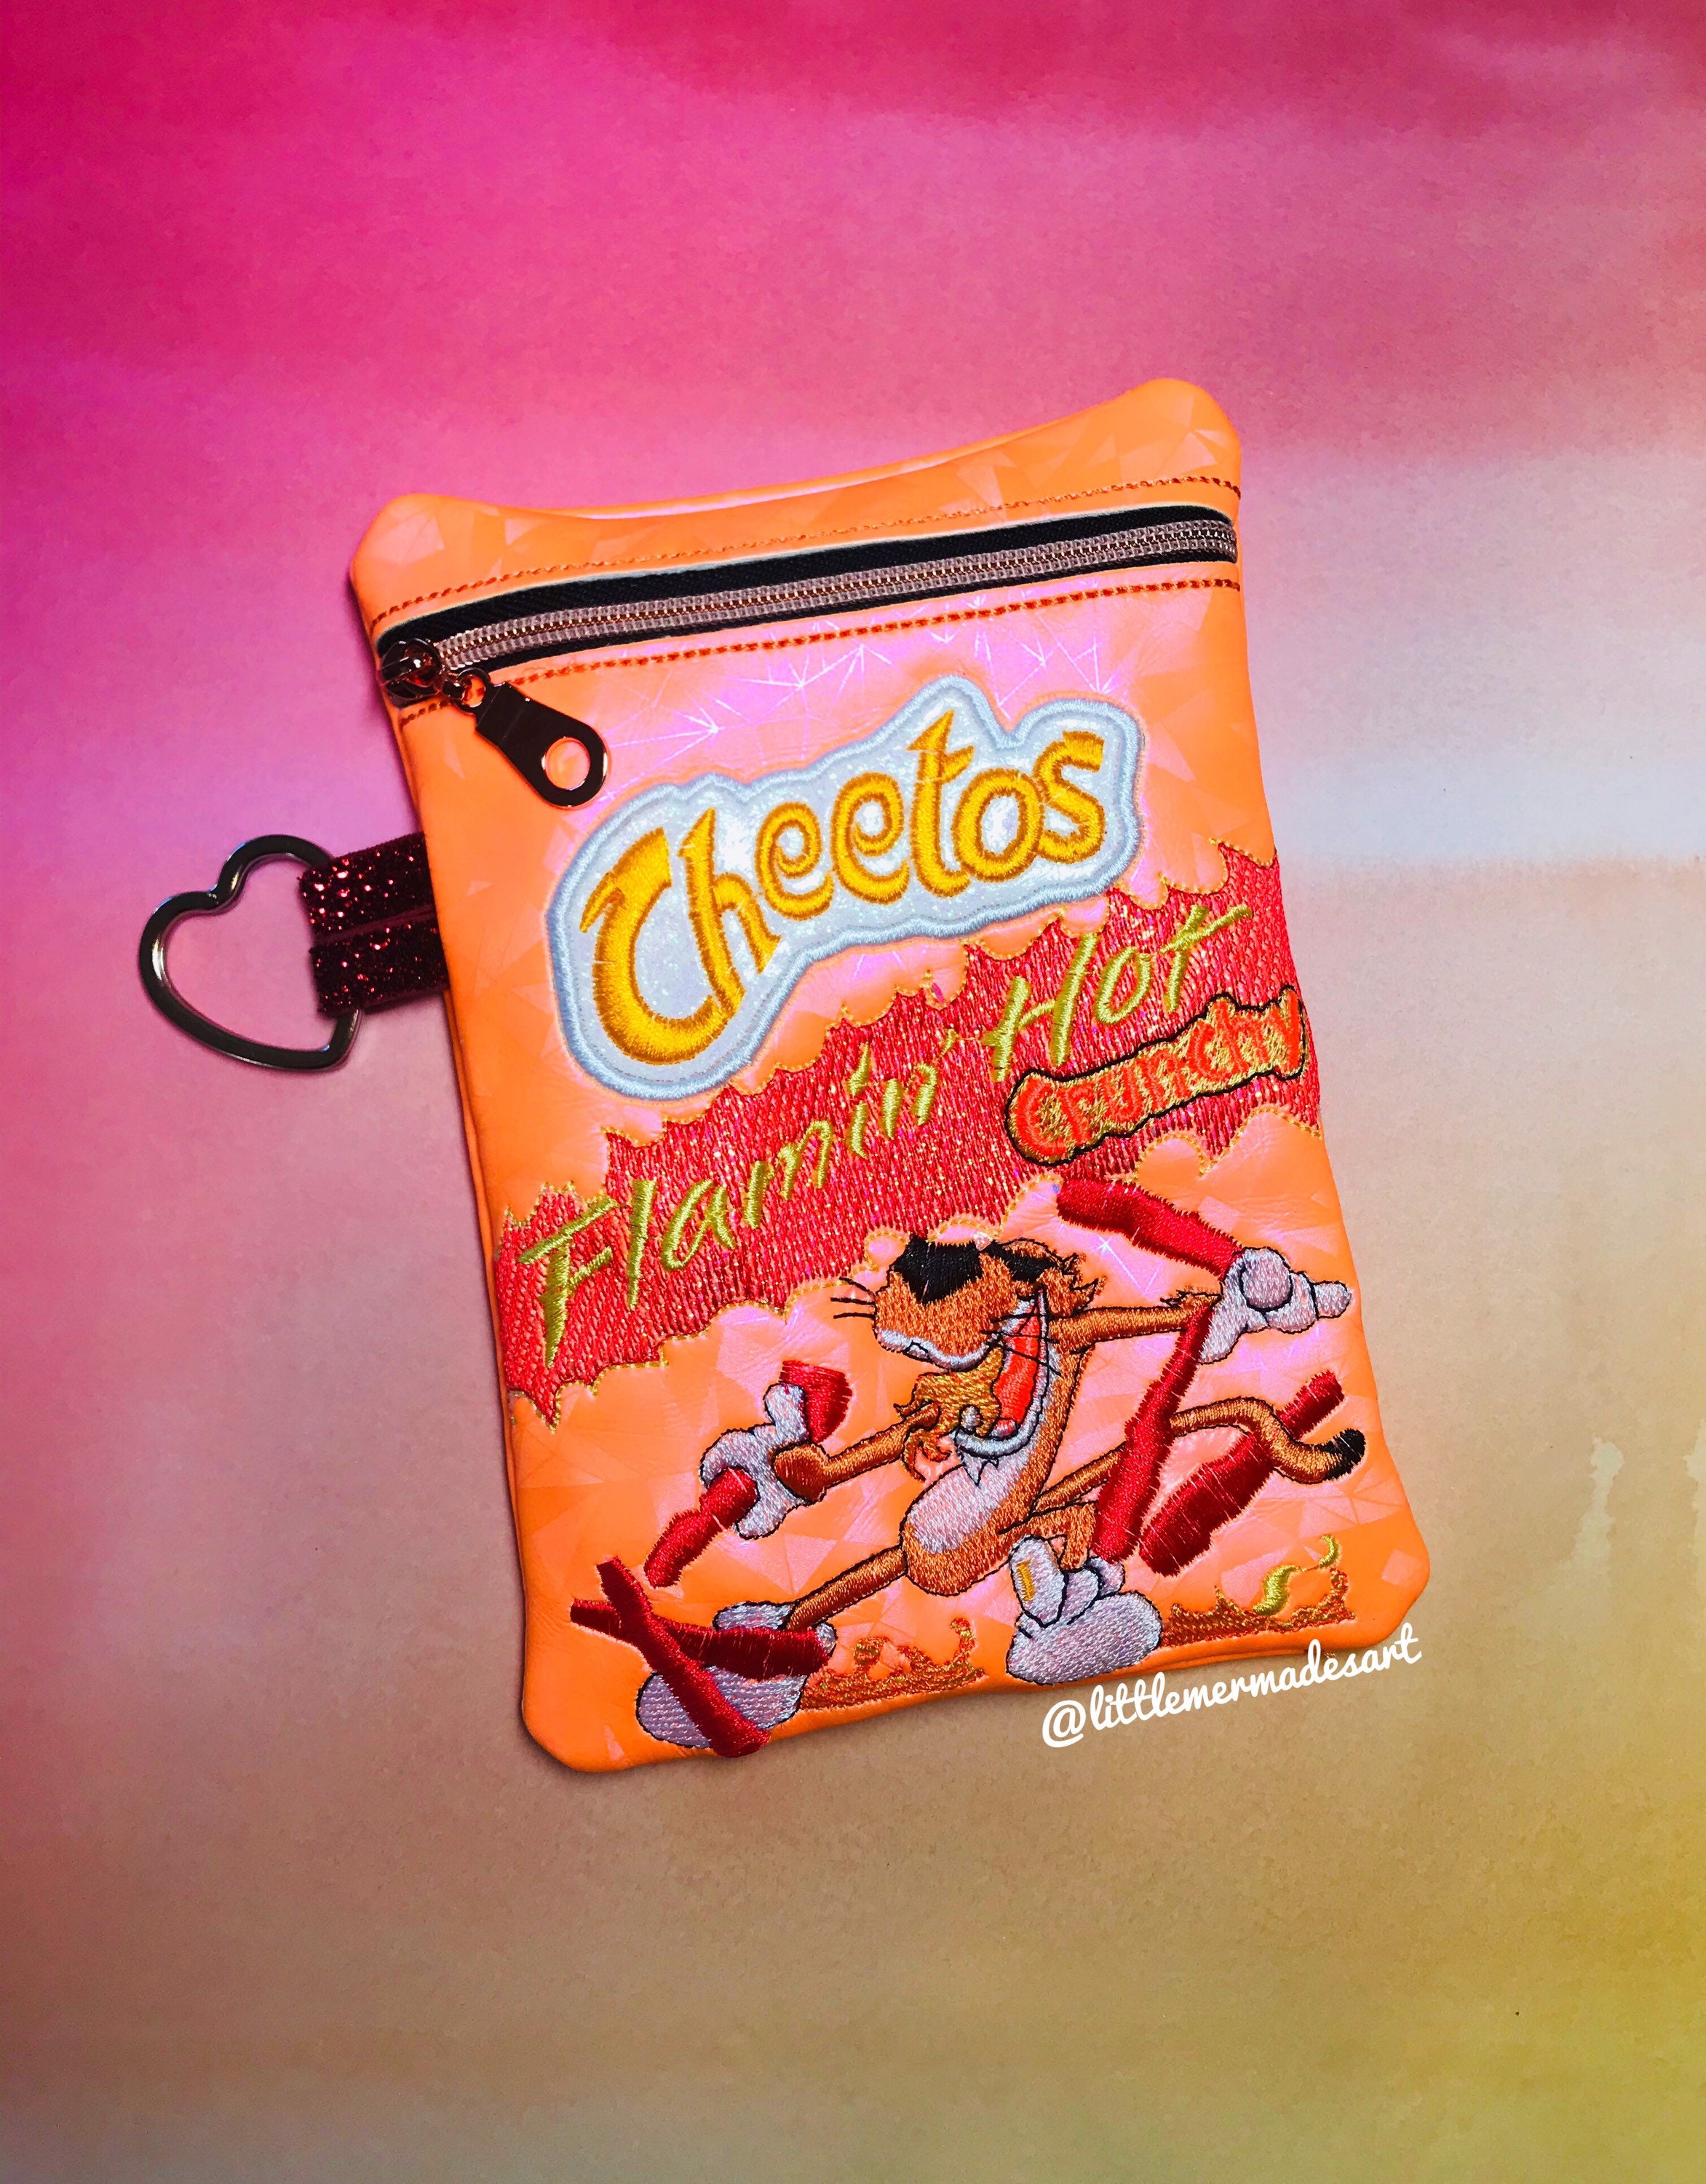 Bag of Cheetos Painting by John Kilduff | Saatchi Art